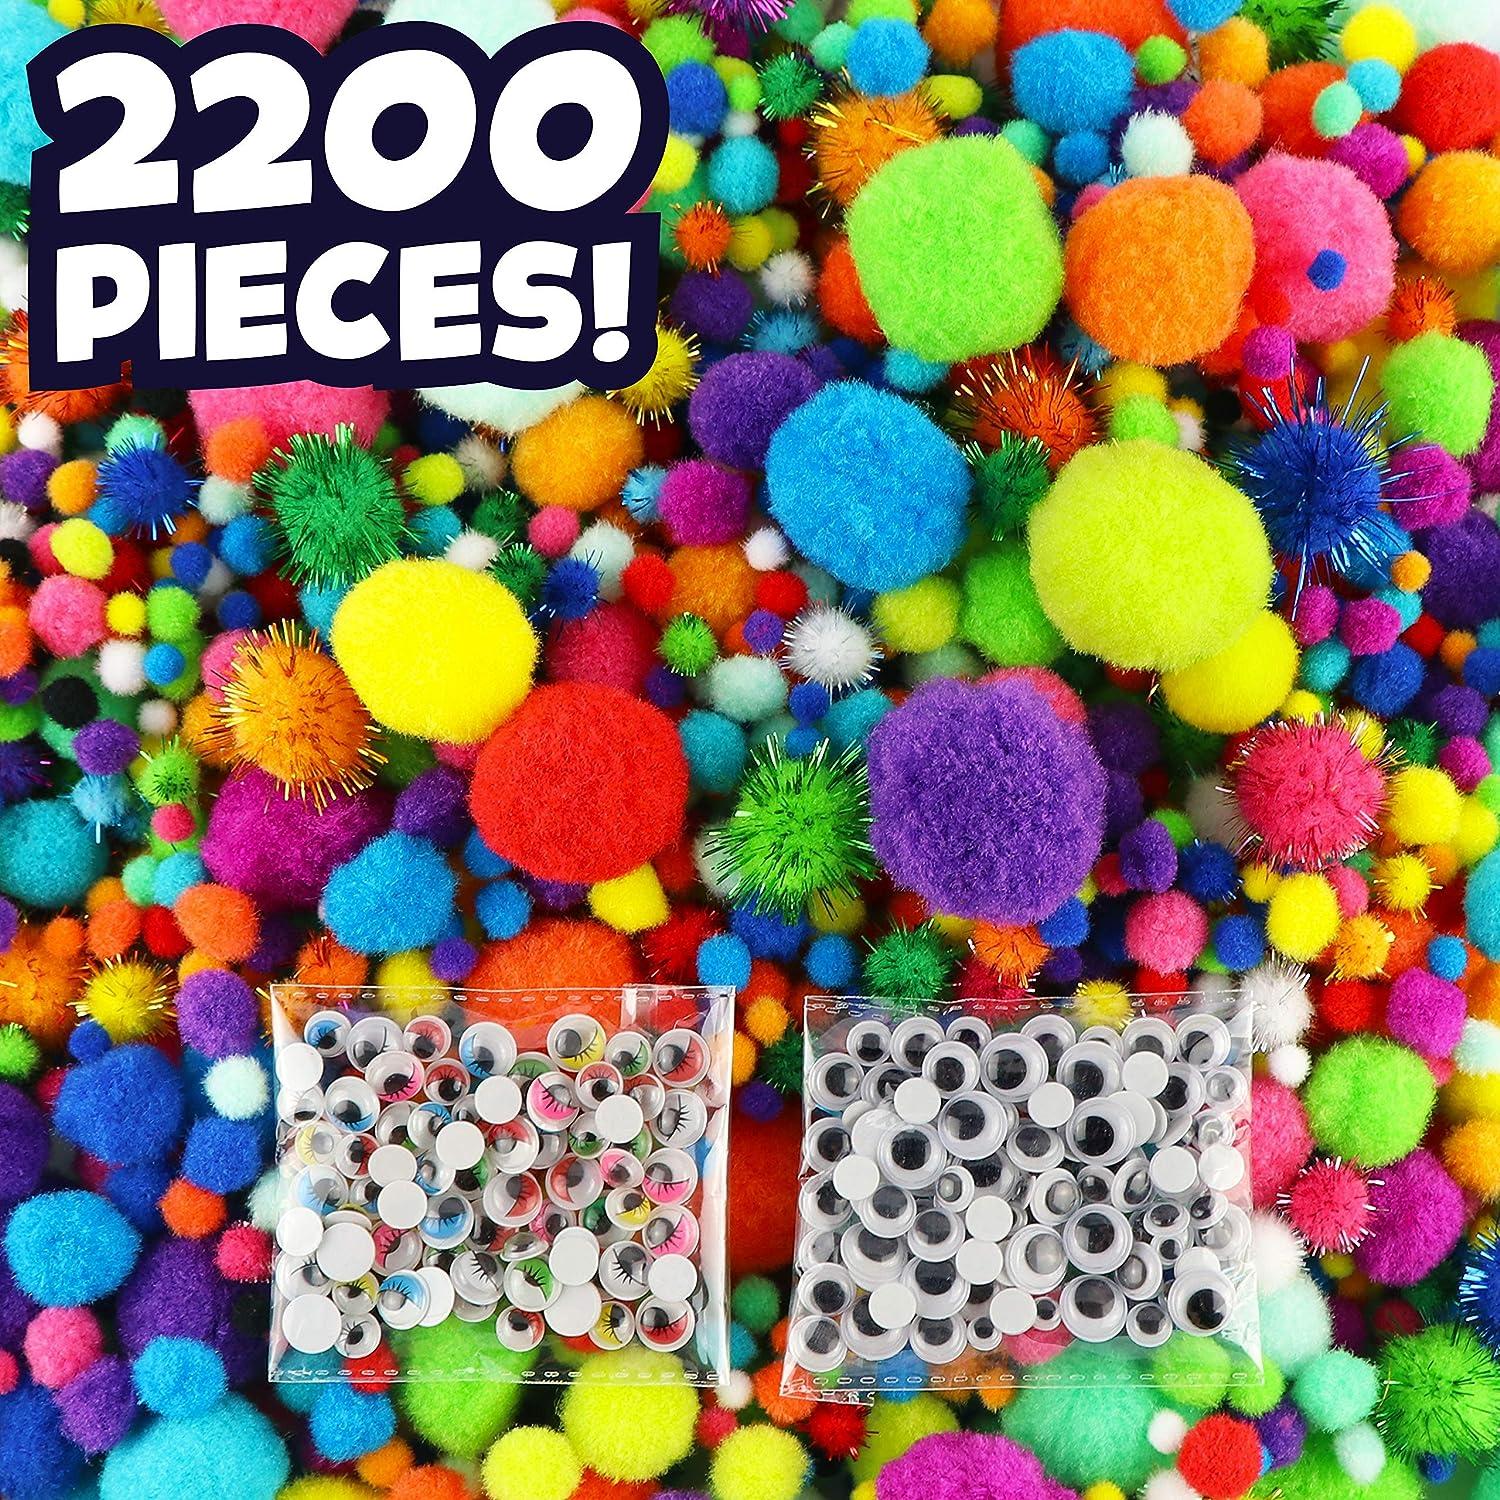 Carl & Kay [400 Pcs] 350 1 inch Pom Poms & 50 Googly Eyes, Bulk Craft Pompoms in Bright & Bold Assorted Colors, Pompoms for Crafts, Assorted Pom Pom